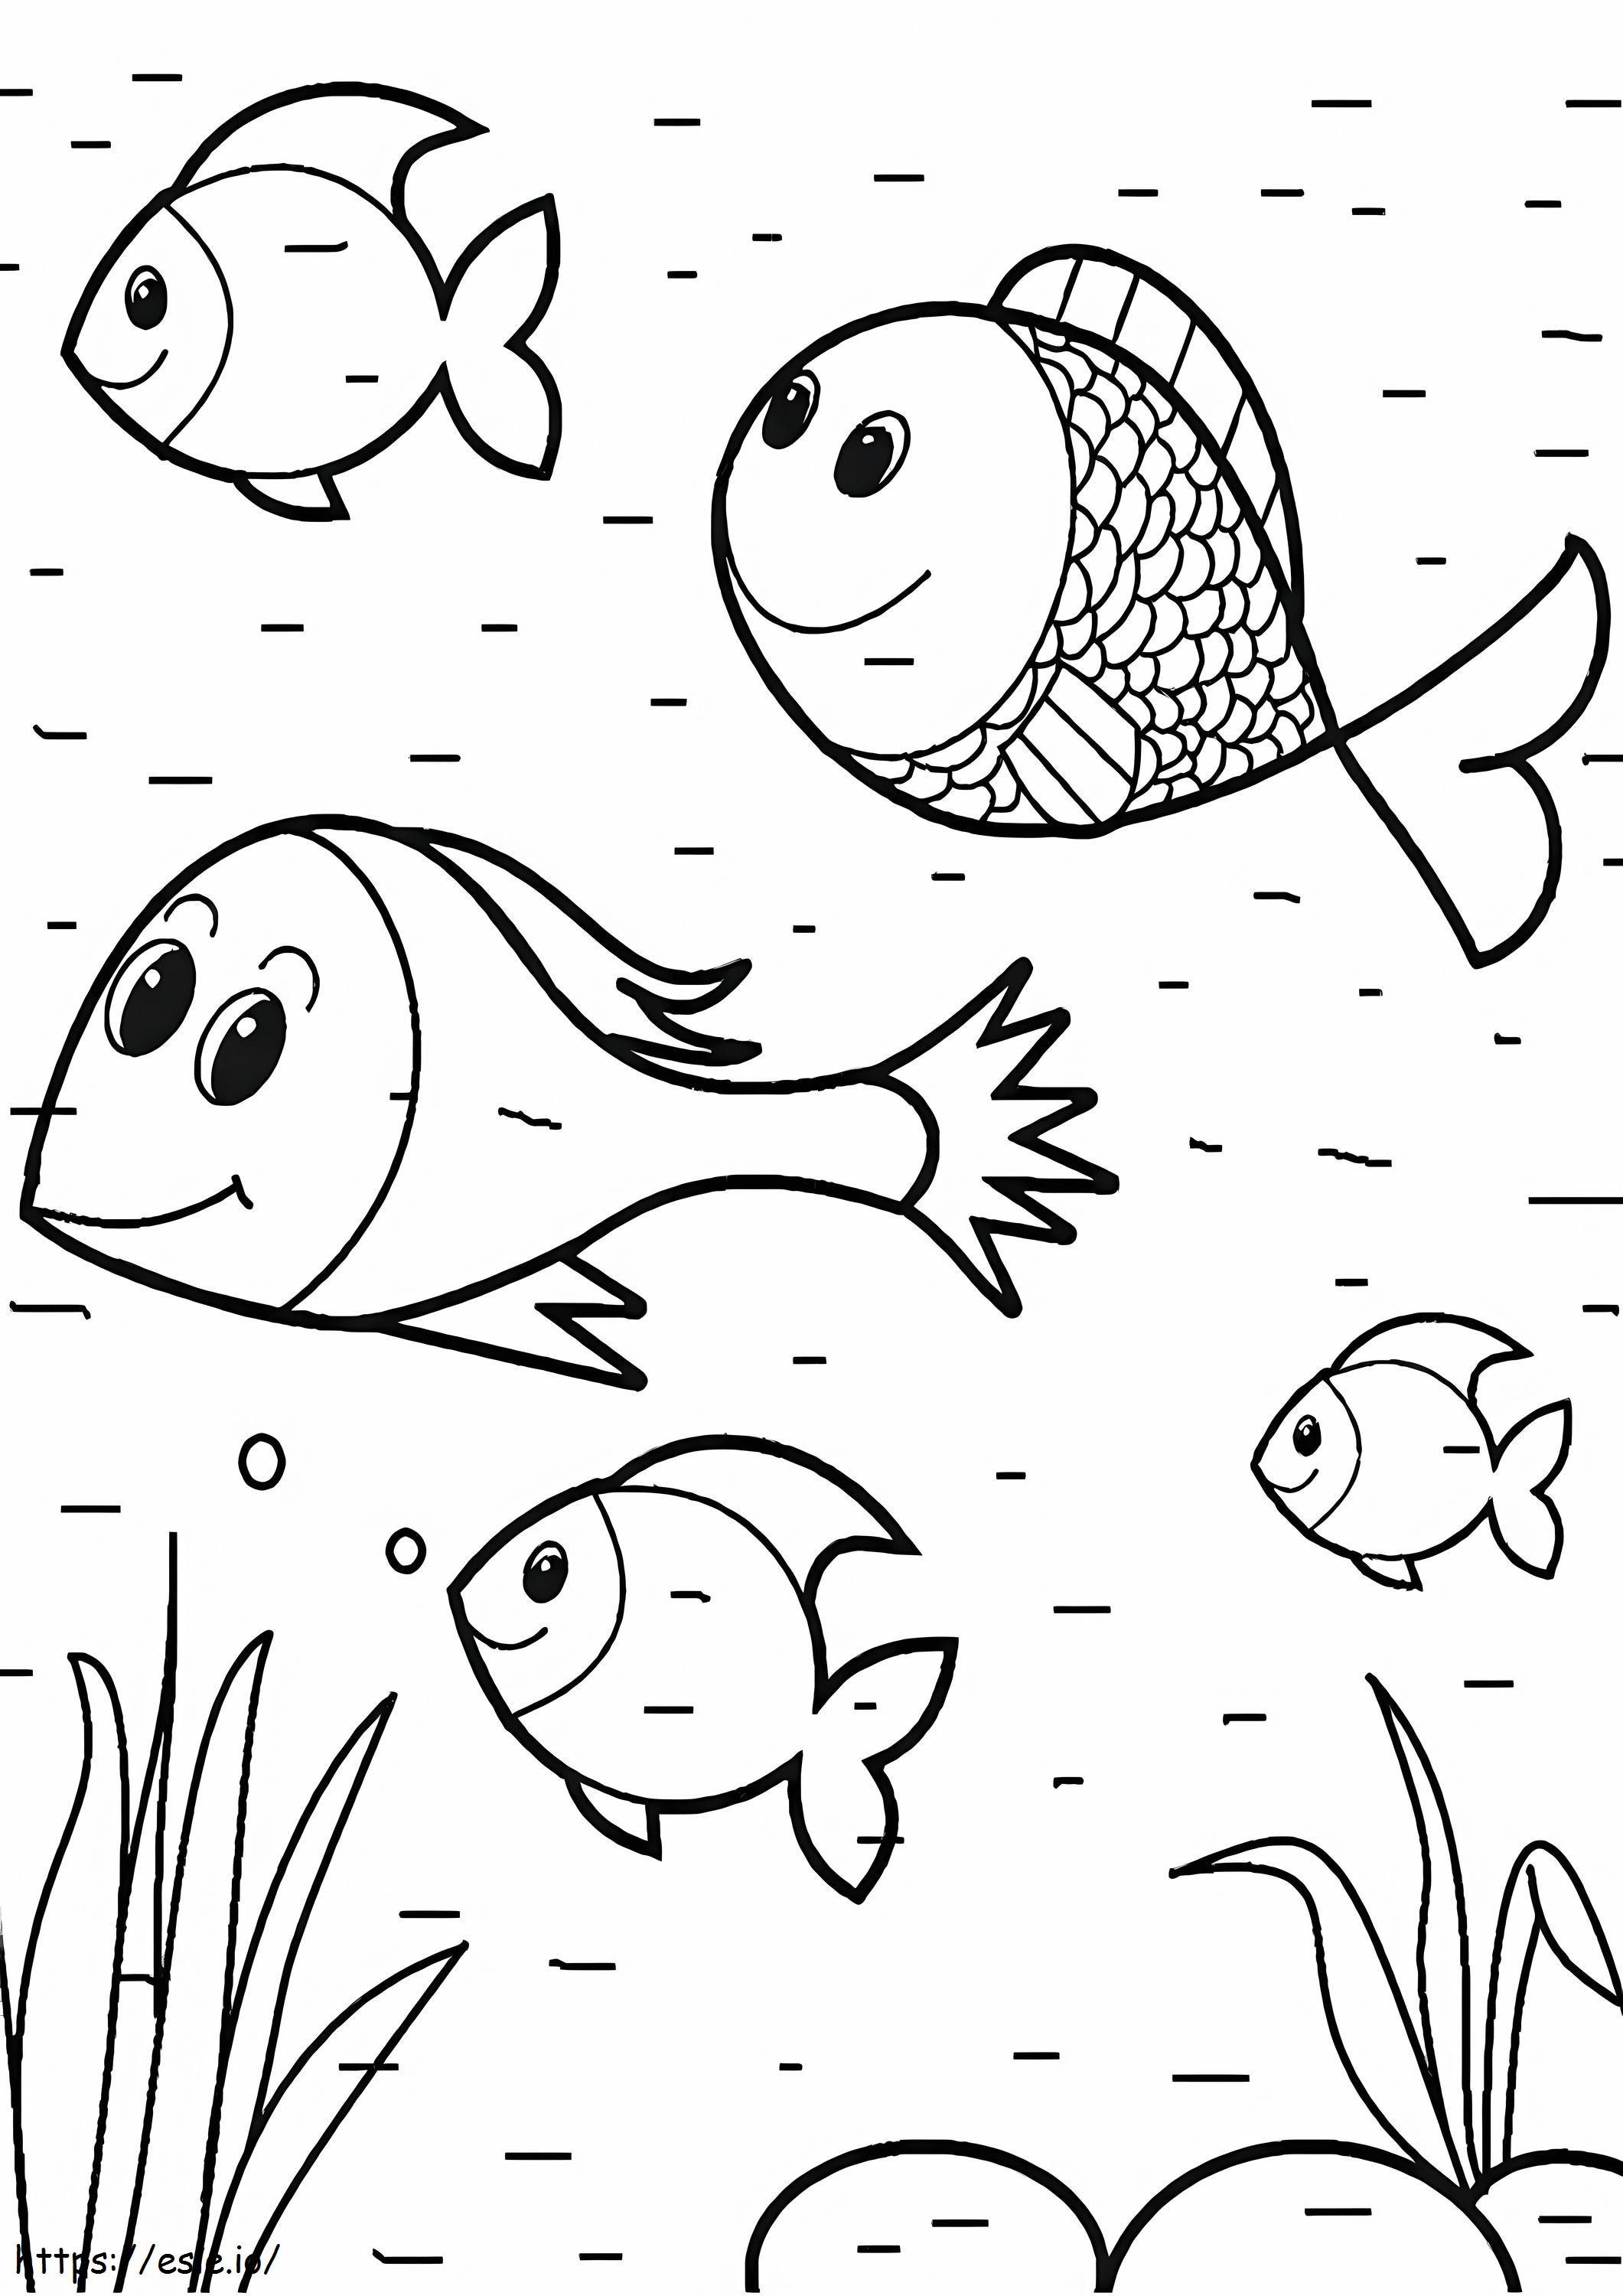 Cinco peces de dibujos animados para colorear